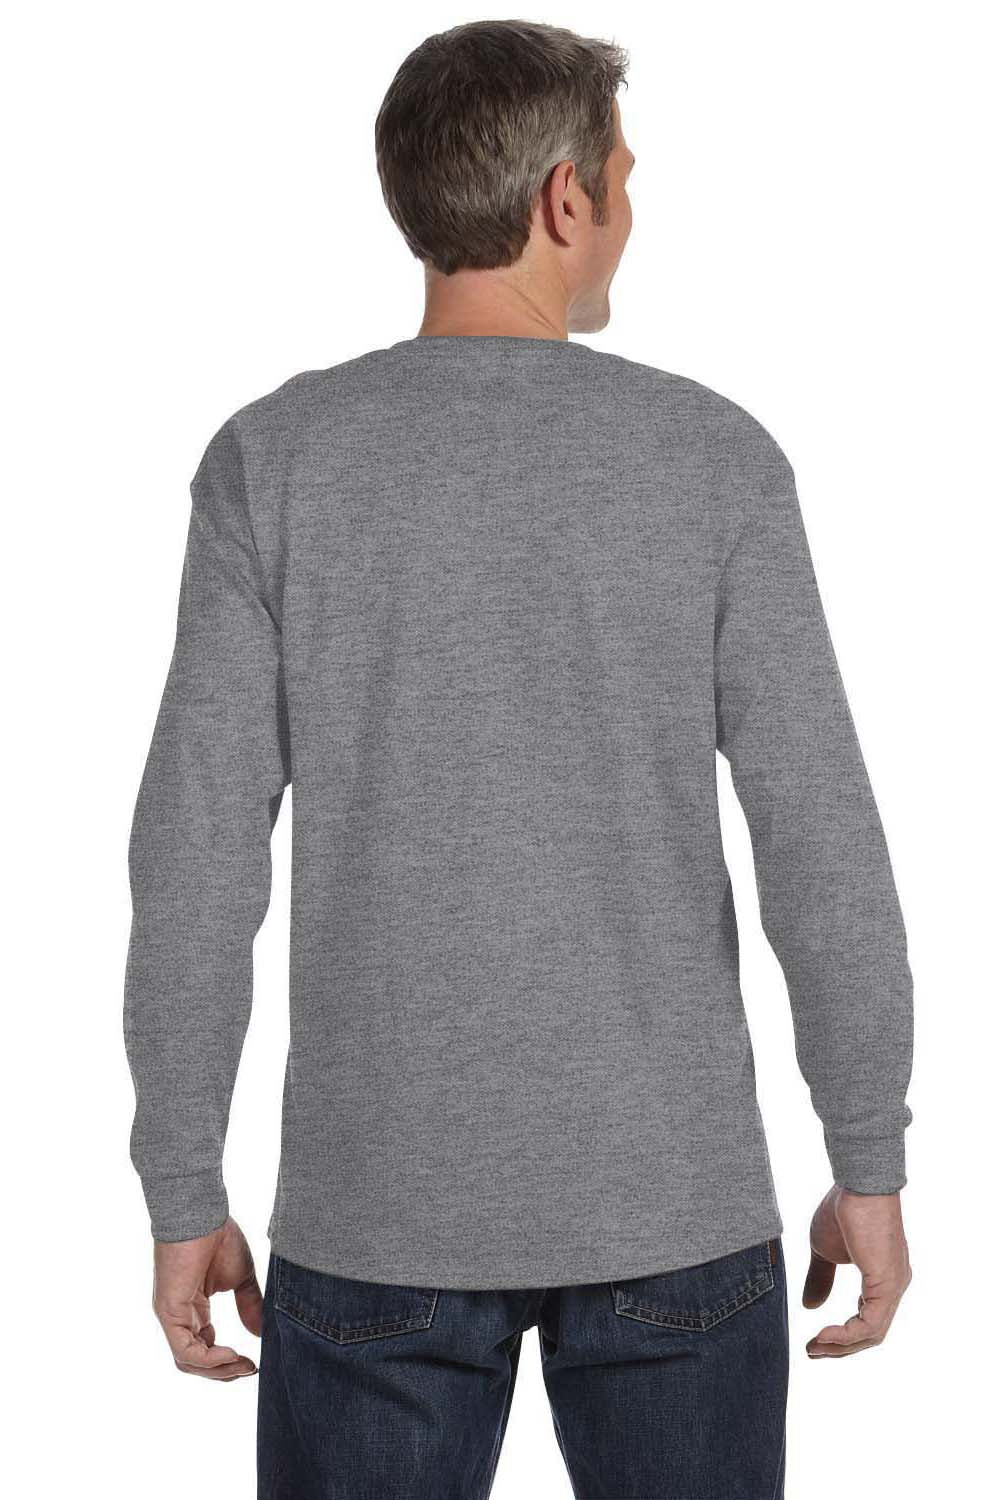 Gildan G540 Mens Long Sleeve Crewneck T-Shirt Heather Graphite Grey Back